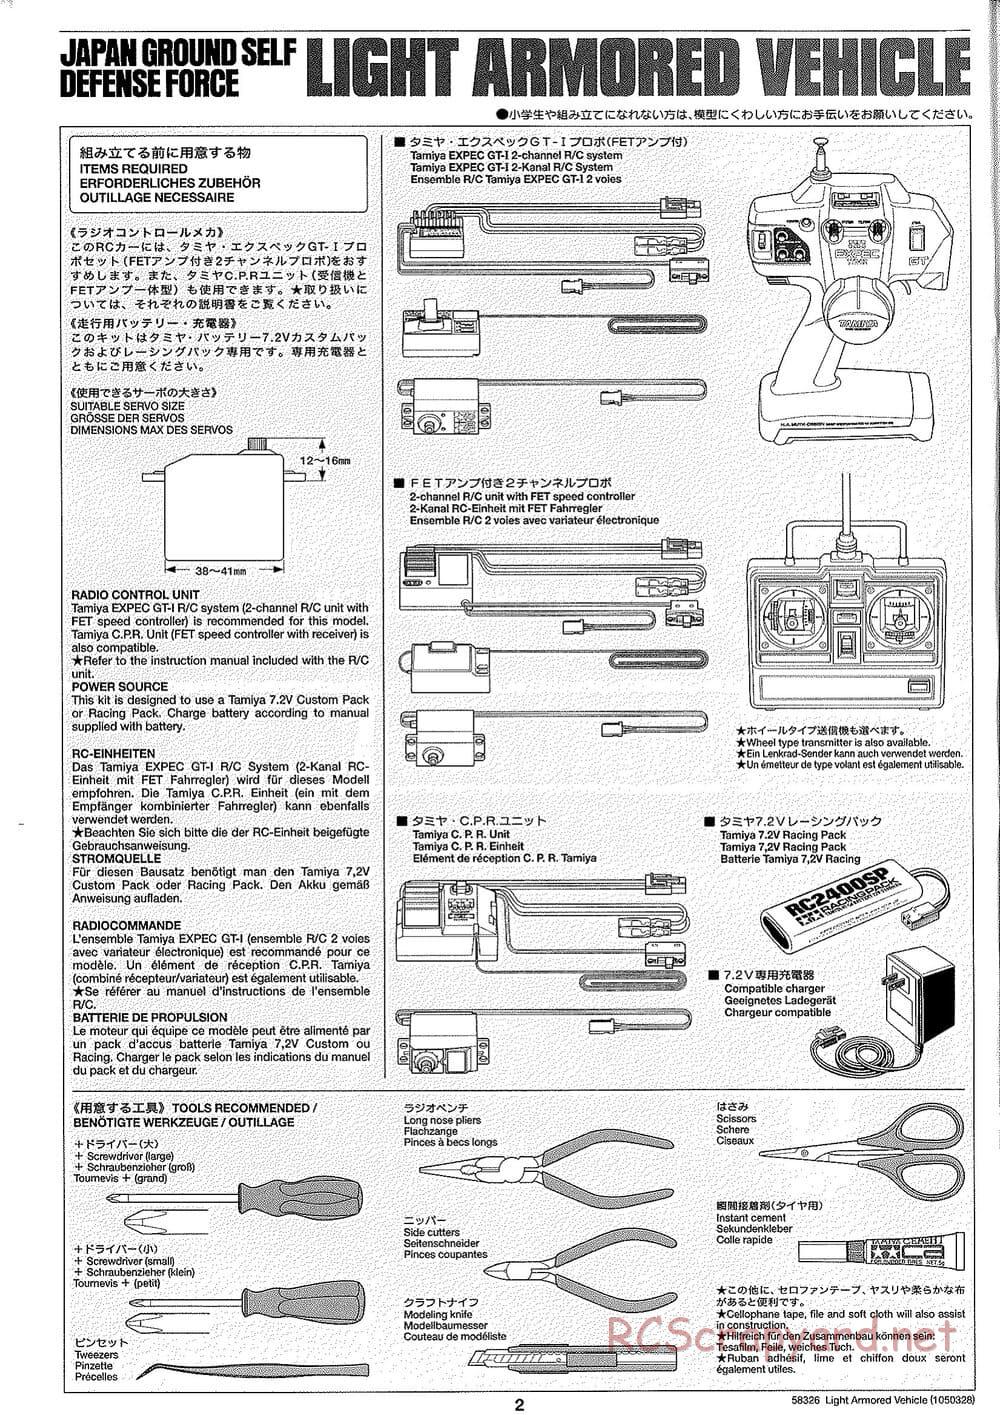 Tamiya - JGSDF Light Armored Vehicle - TA-01 Chassis - Manual - Page 2